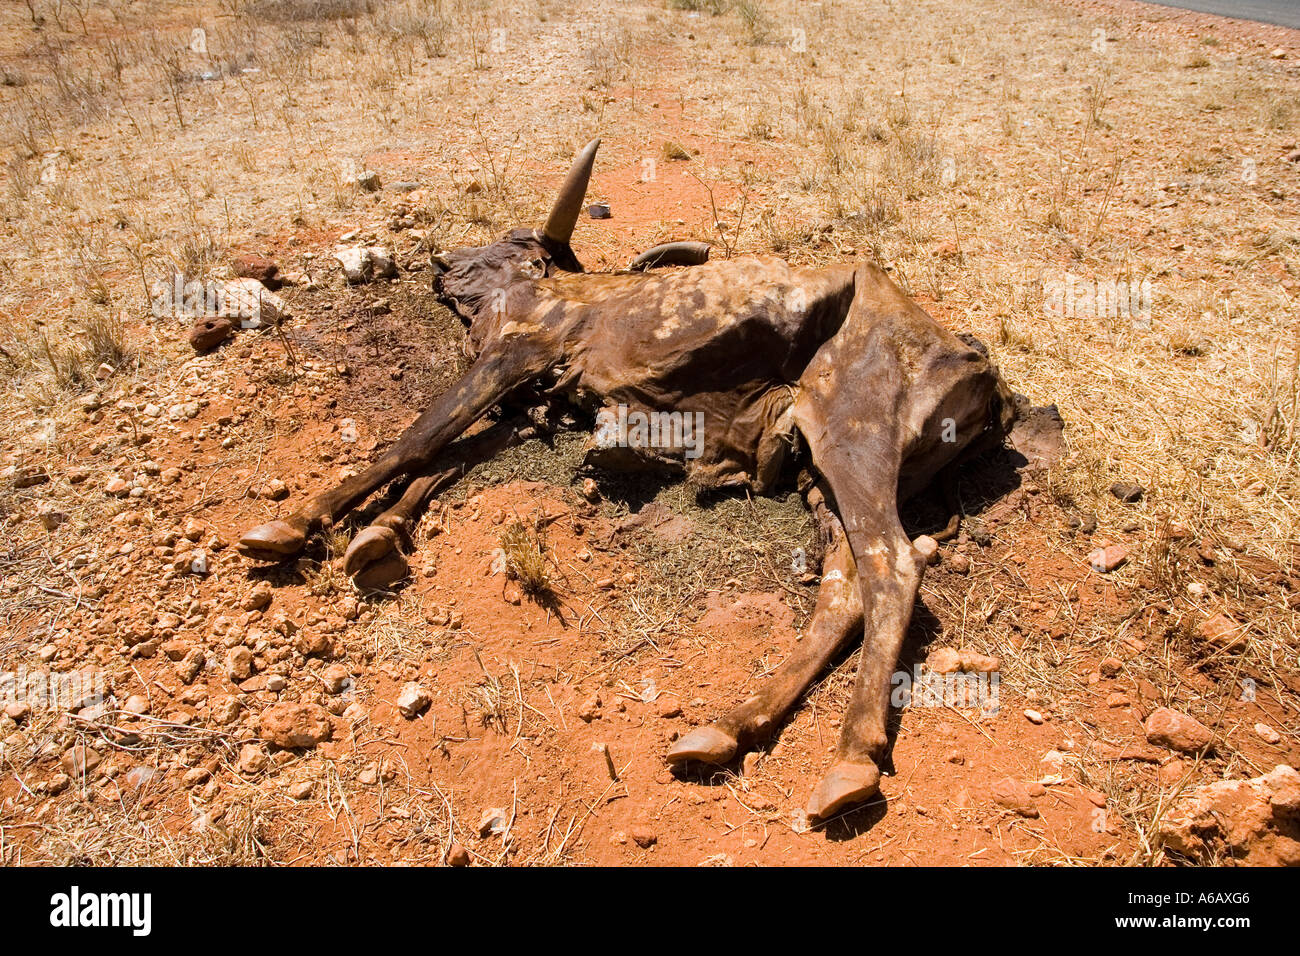 Carcass of dead cow in drought region near Voi Kenya Stock Photo